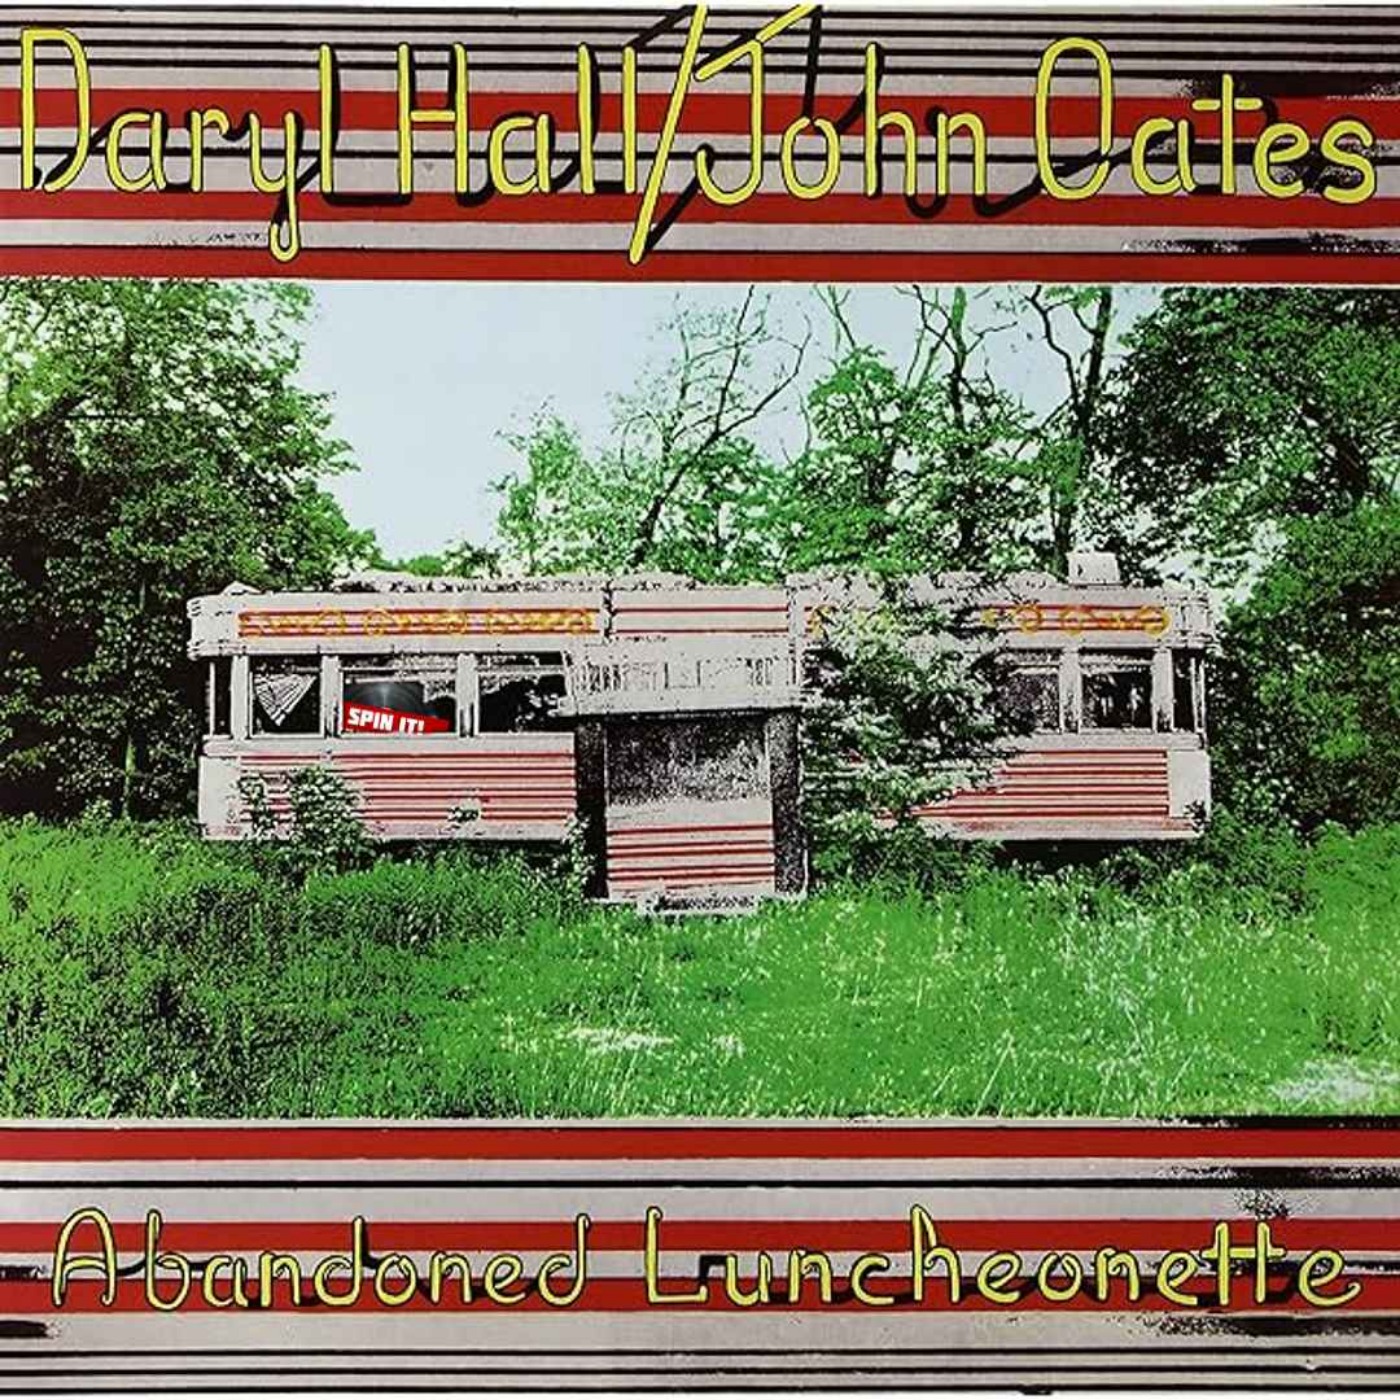 Abandoned Luncheonette - Daryl Hall & John Oates: Episode 131